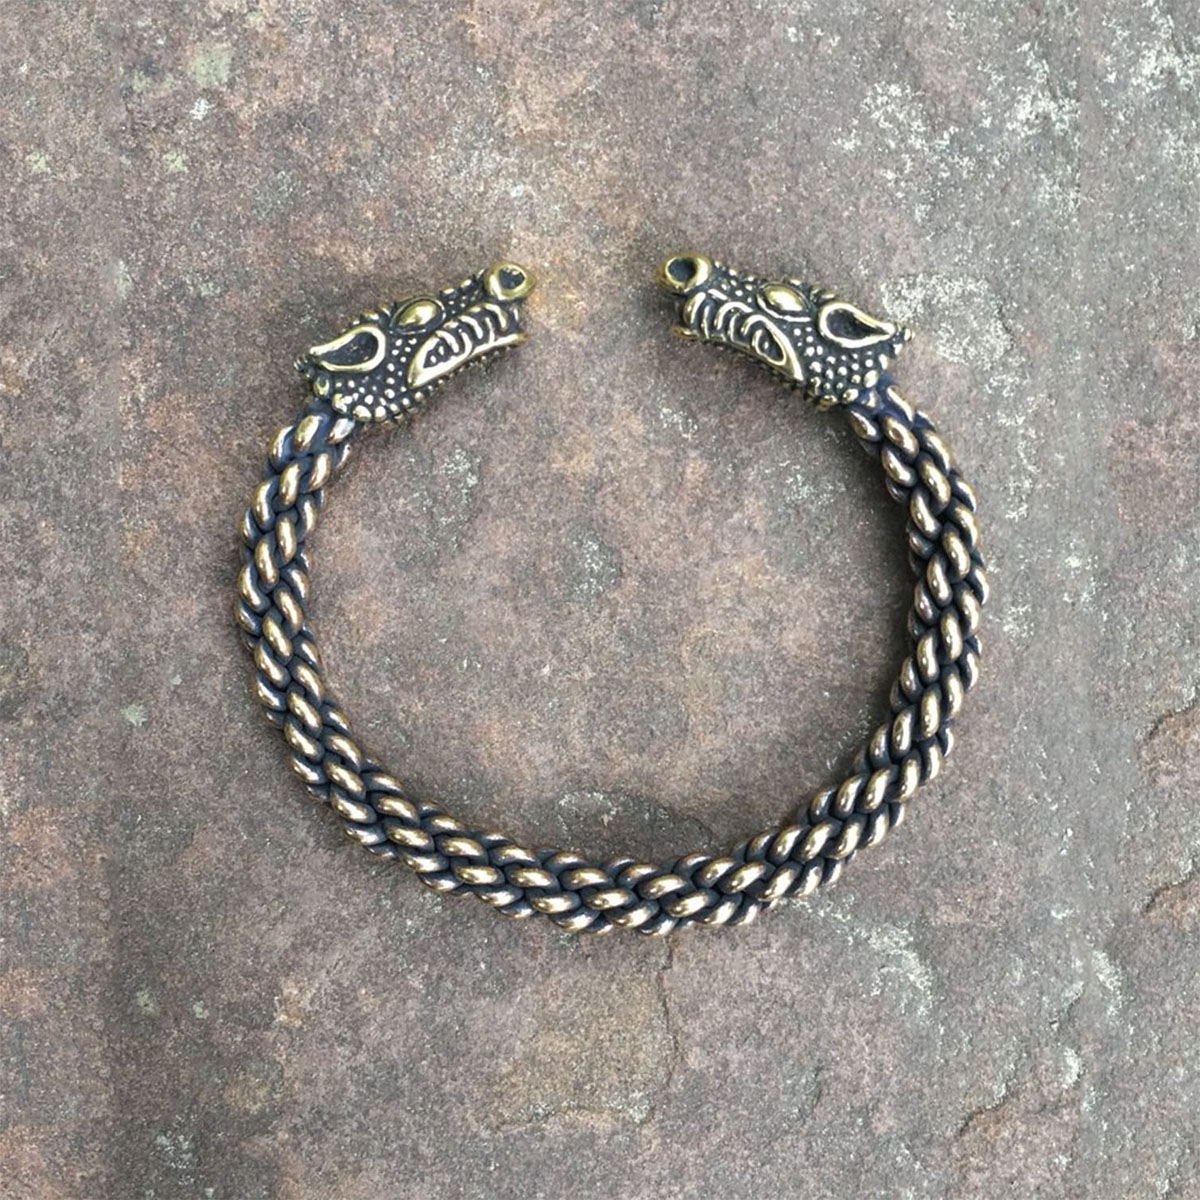 Antique Celtic Bangle - Kolowrat Knot Norse Viking Bracelet